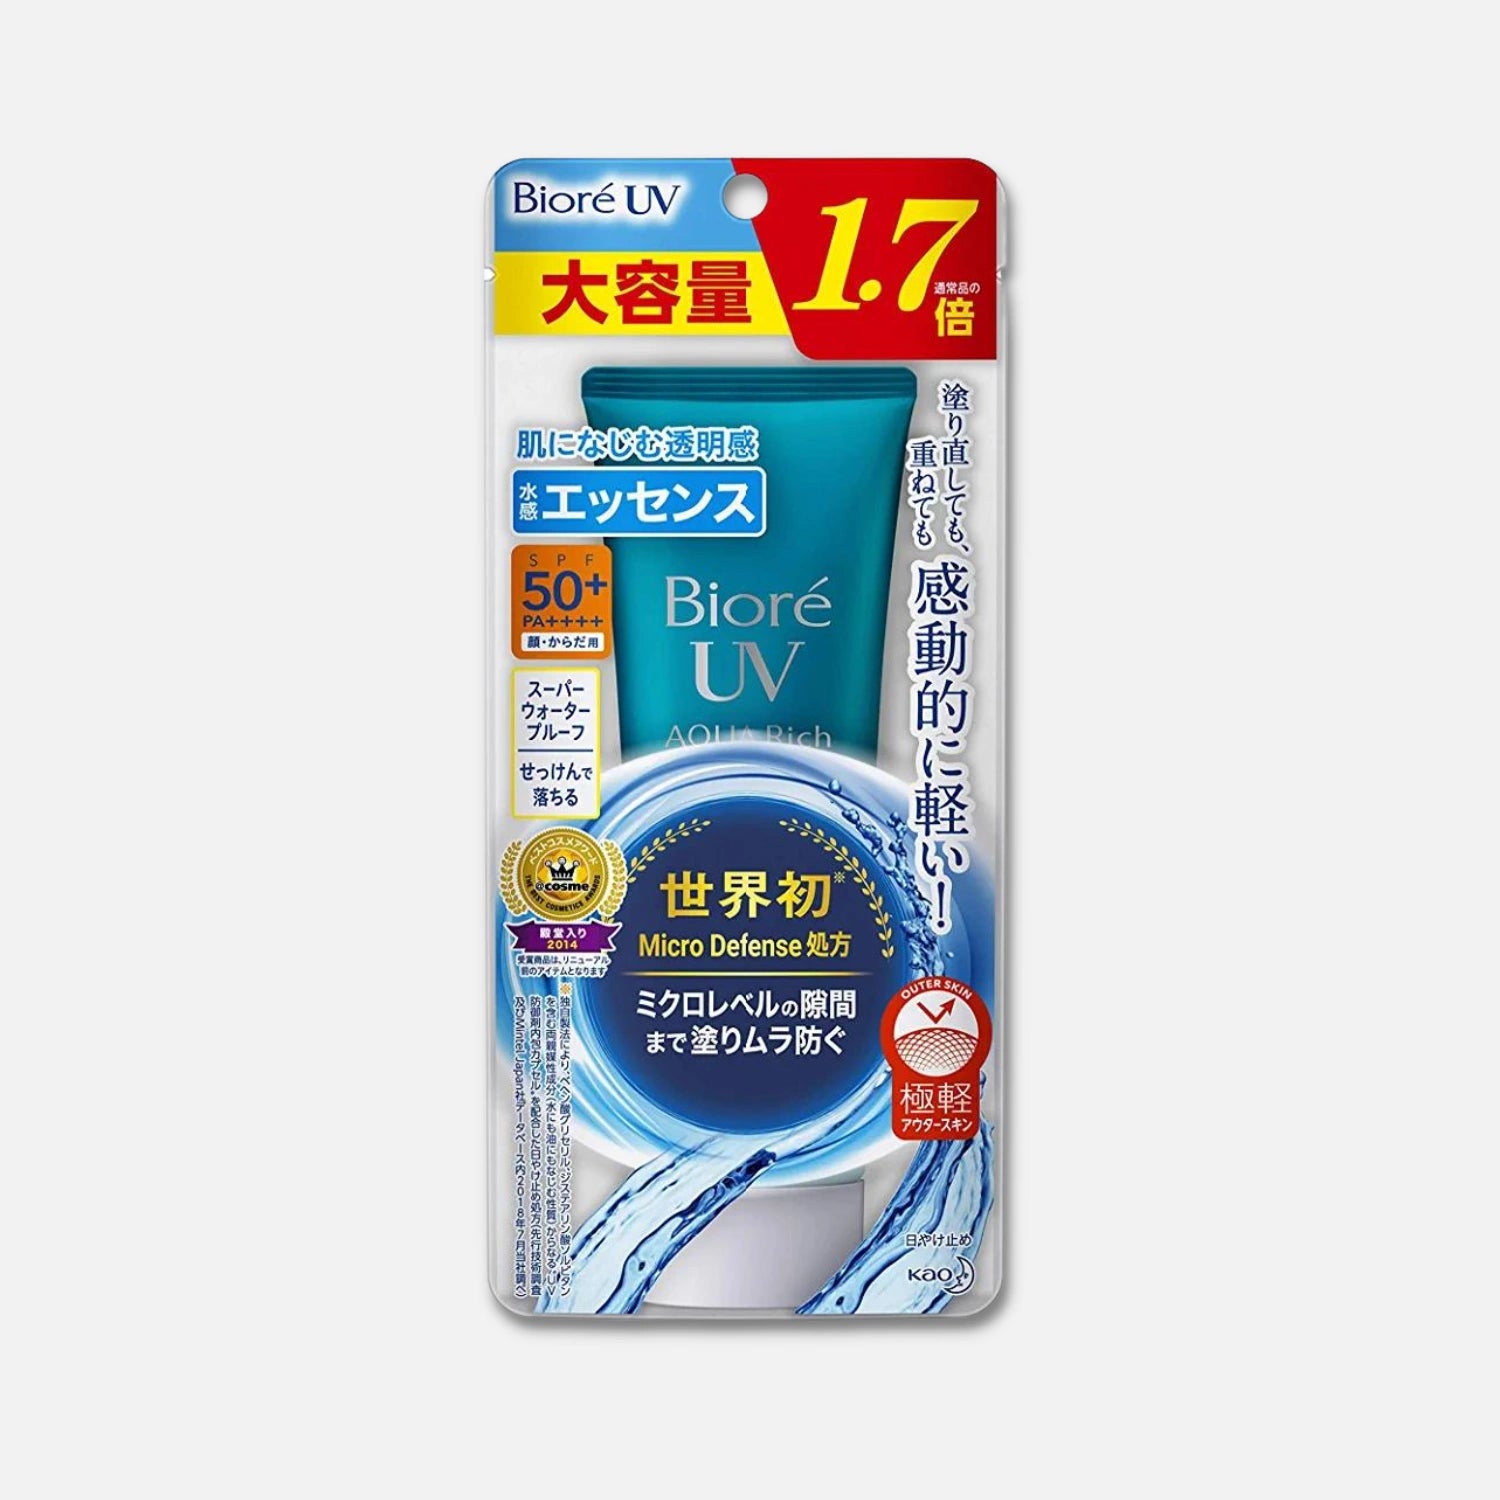 Biore UV Aqua Rich Water Essence SPF 50+ PA++++ 85g - Buy Me Japan